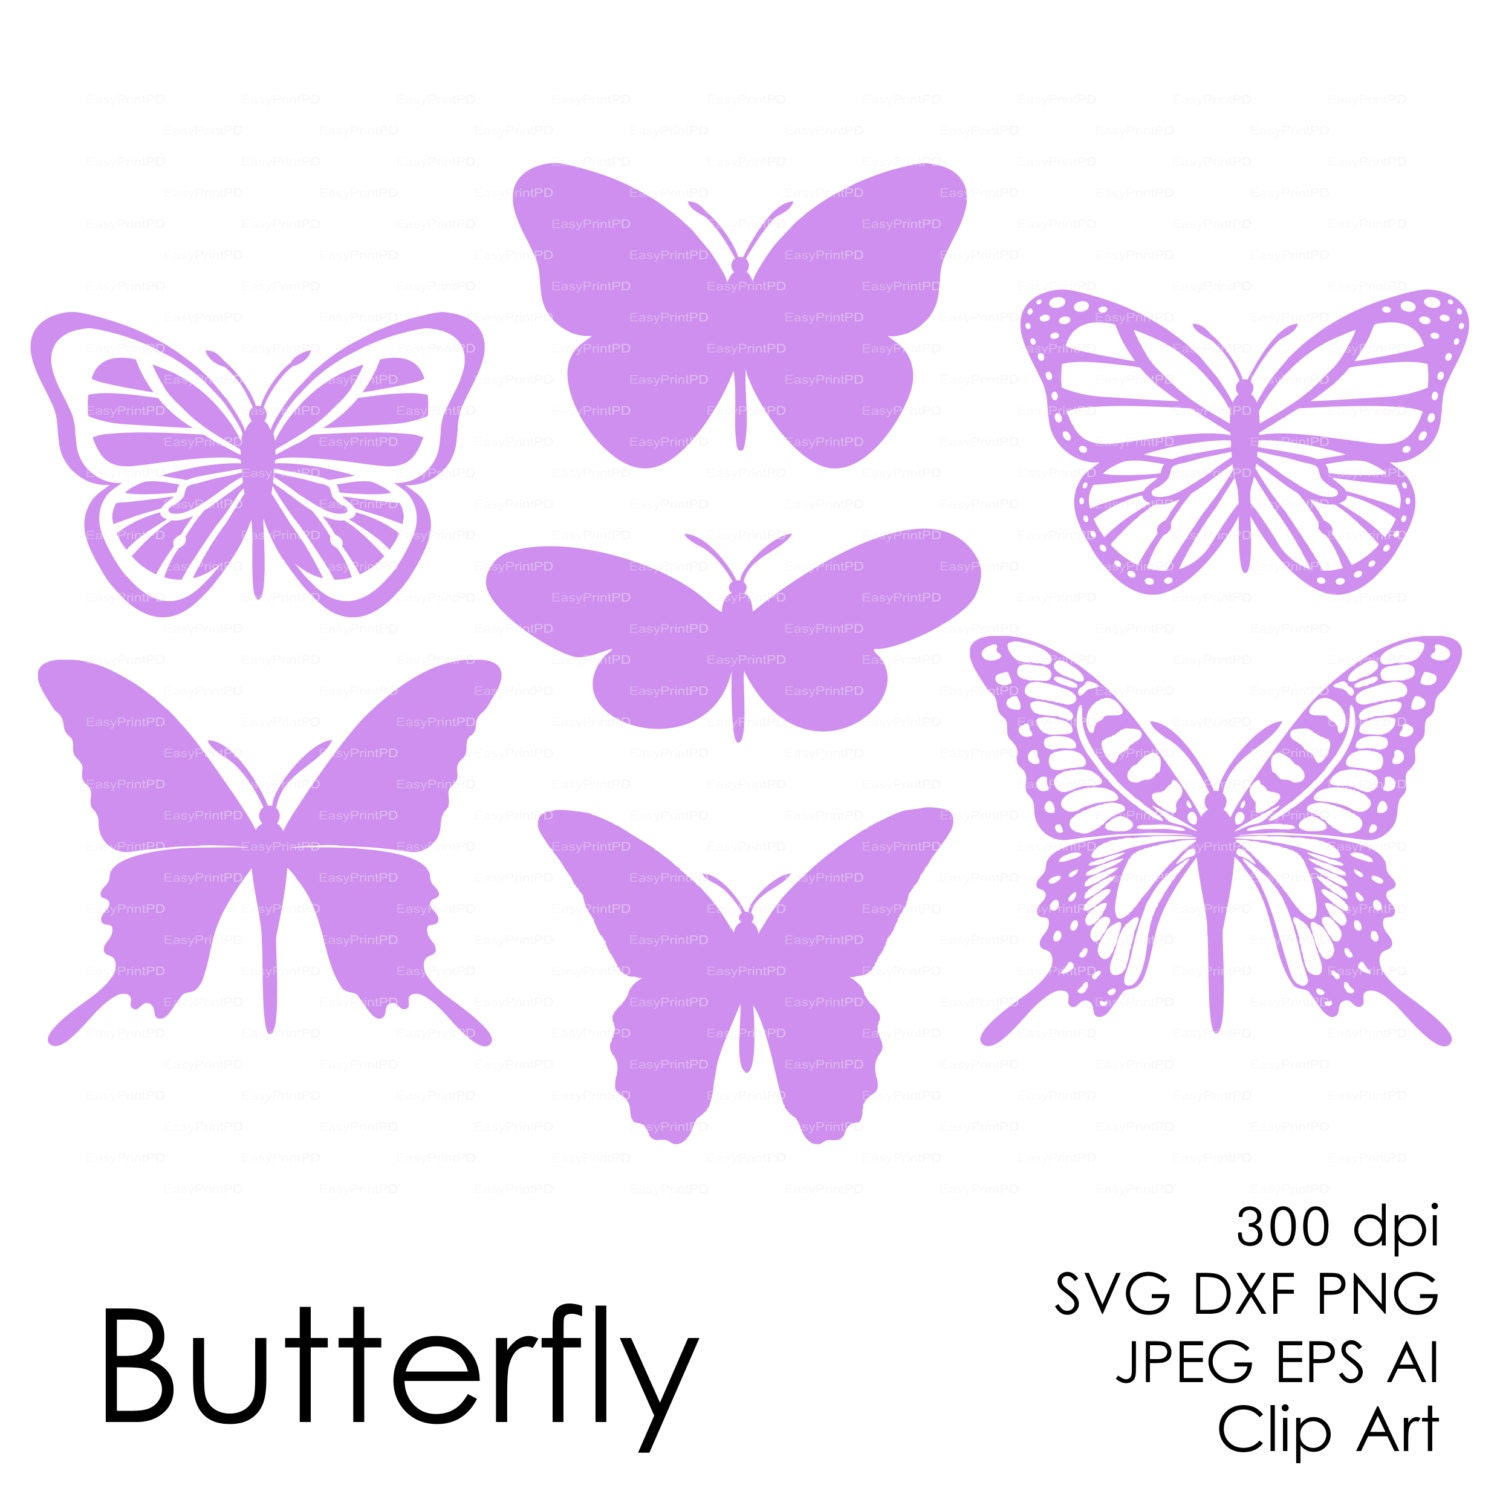 Download Butterflys 300 dpi svg dxf jpg ai eps png vector Clip